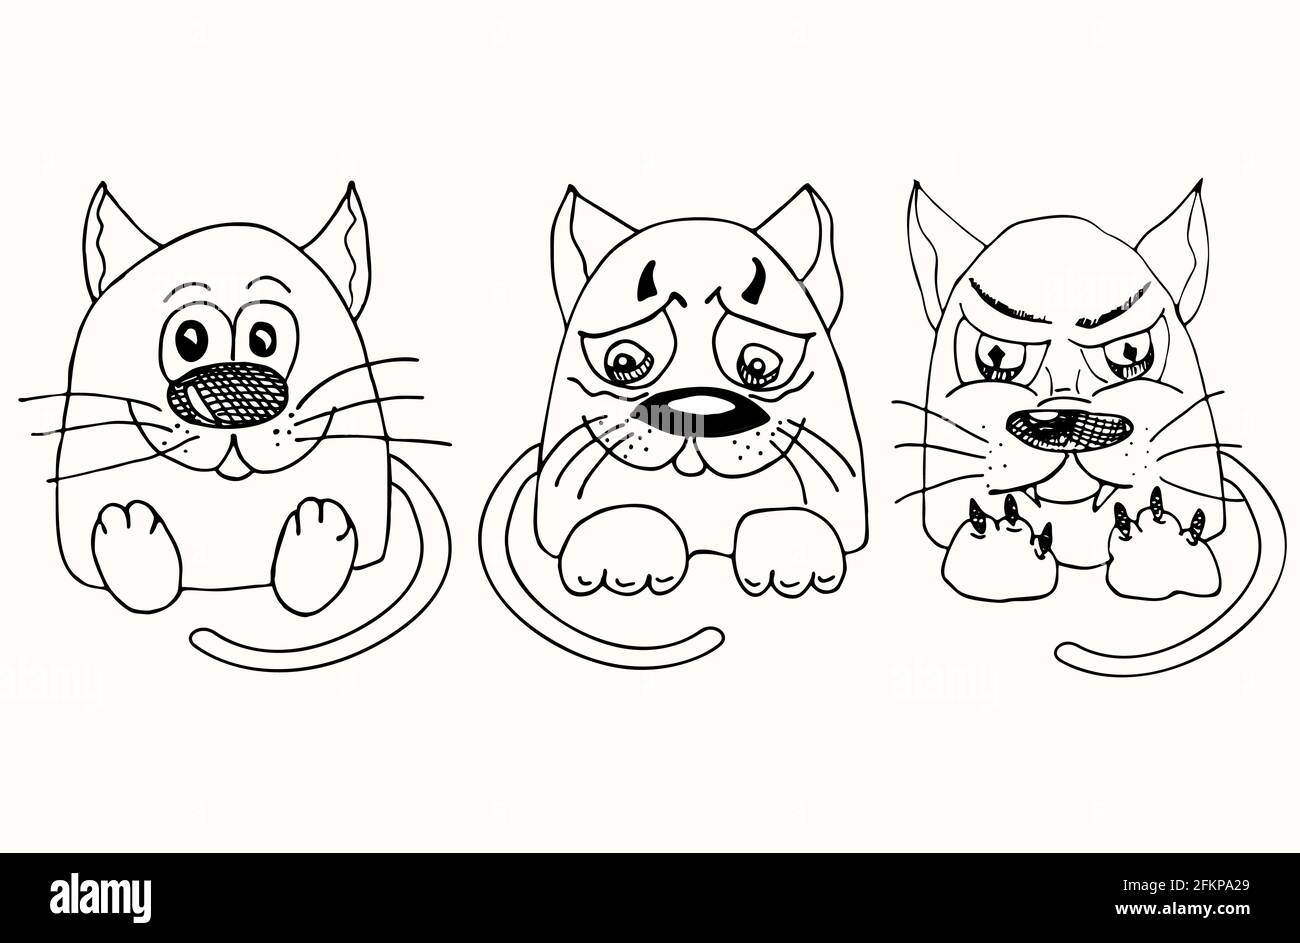 Animal character illustration for children. Hand drawn line drawings of funny kitten Stock Vector